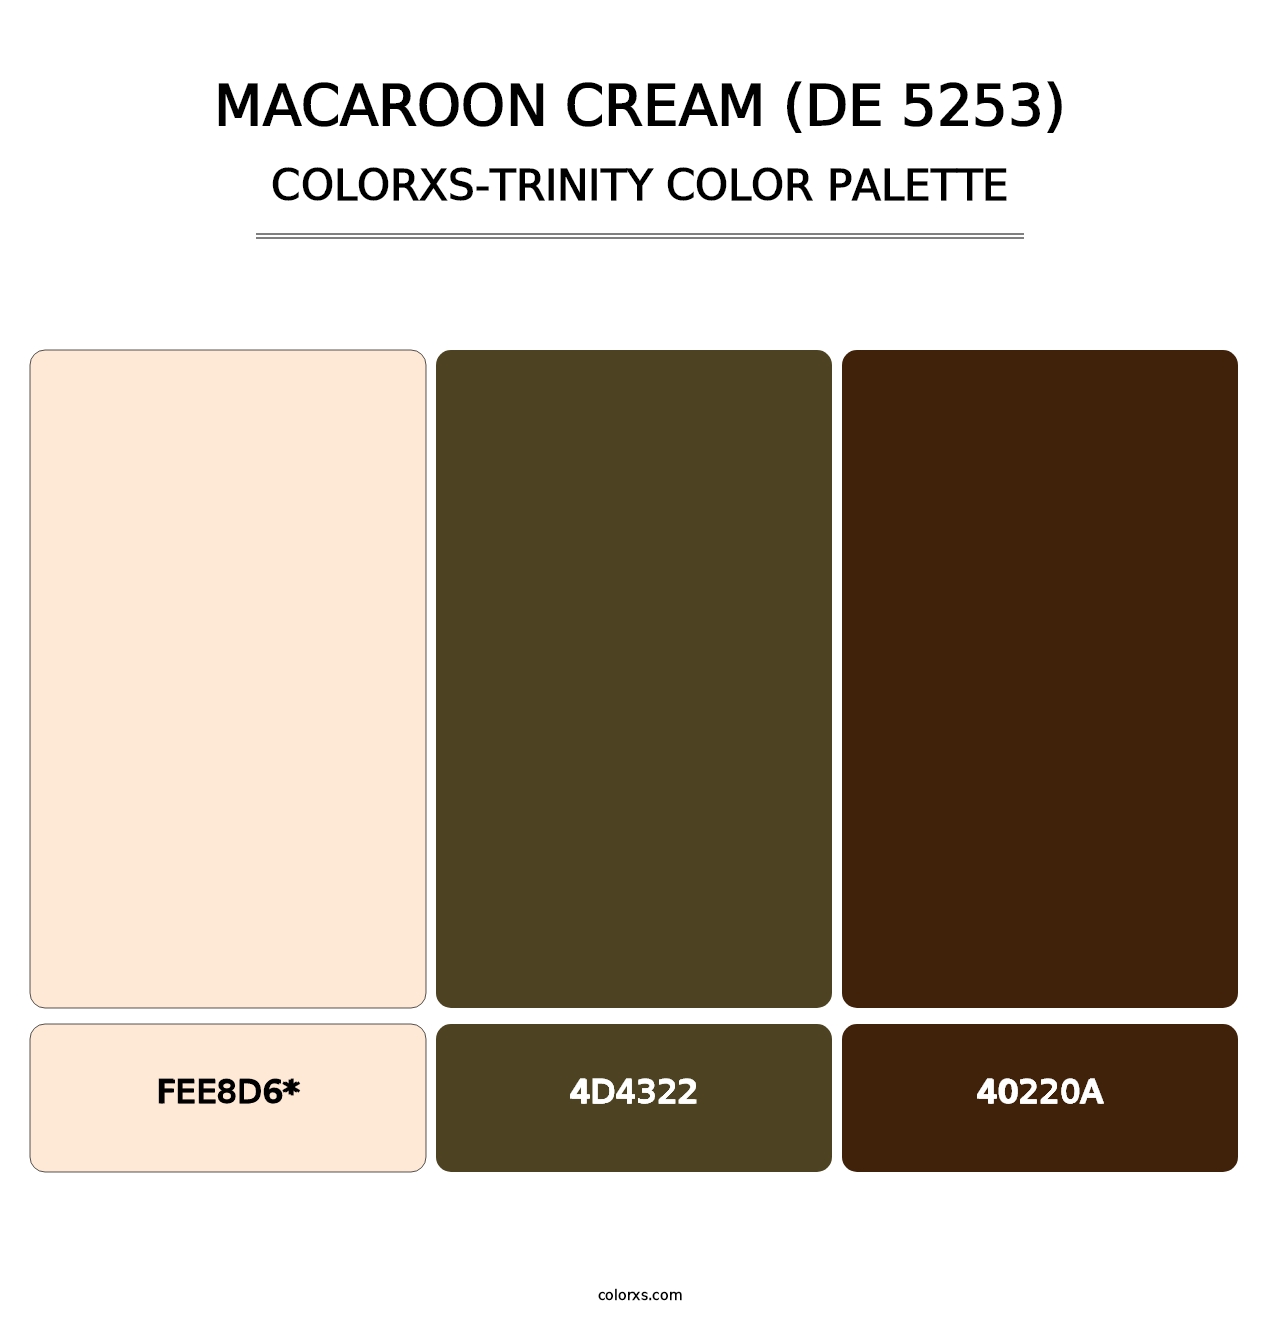 Macaroon Cream (DE 5253) - Colorxs Trinity Palette